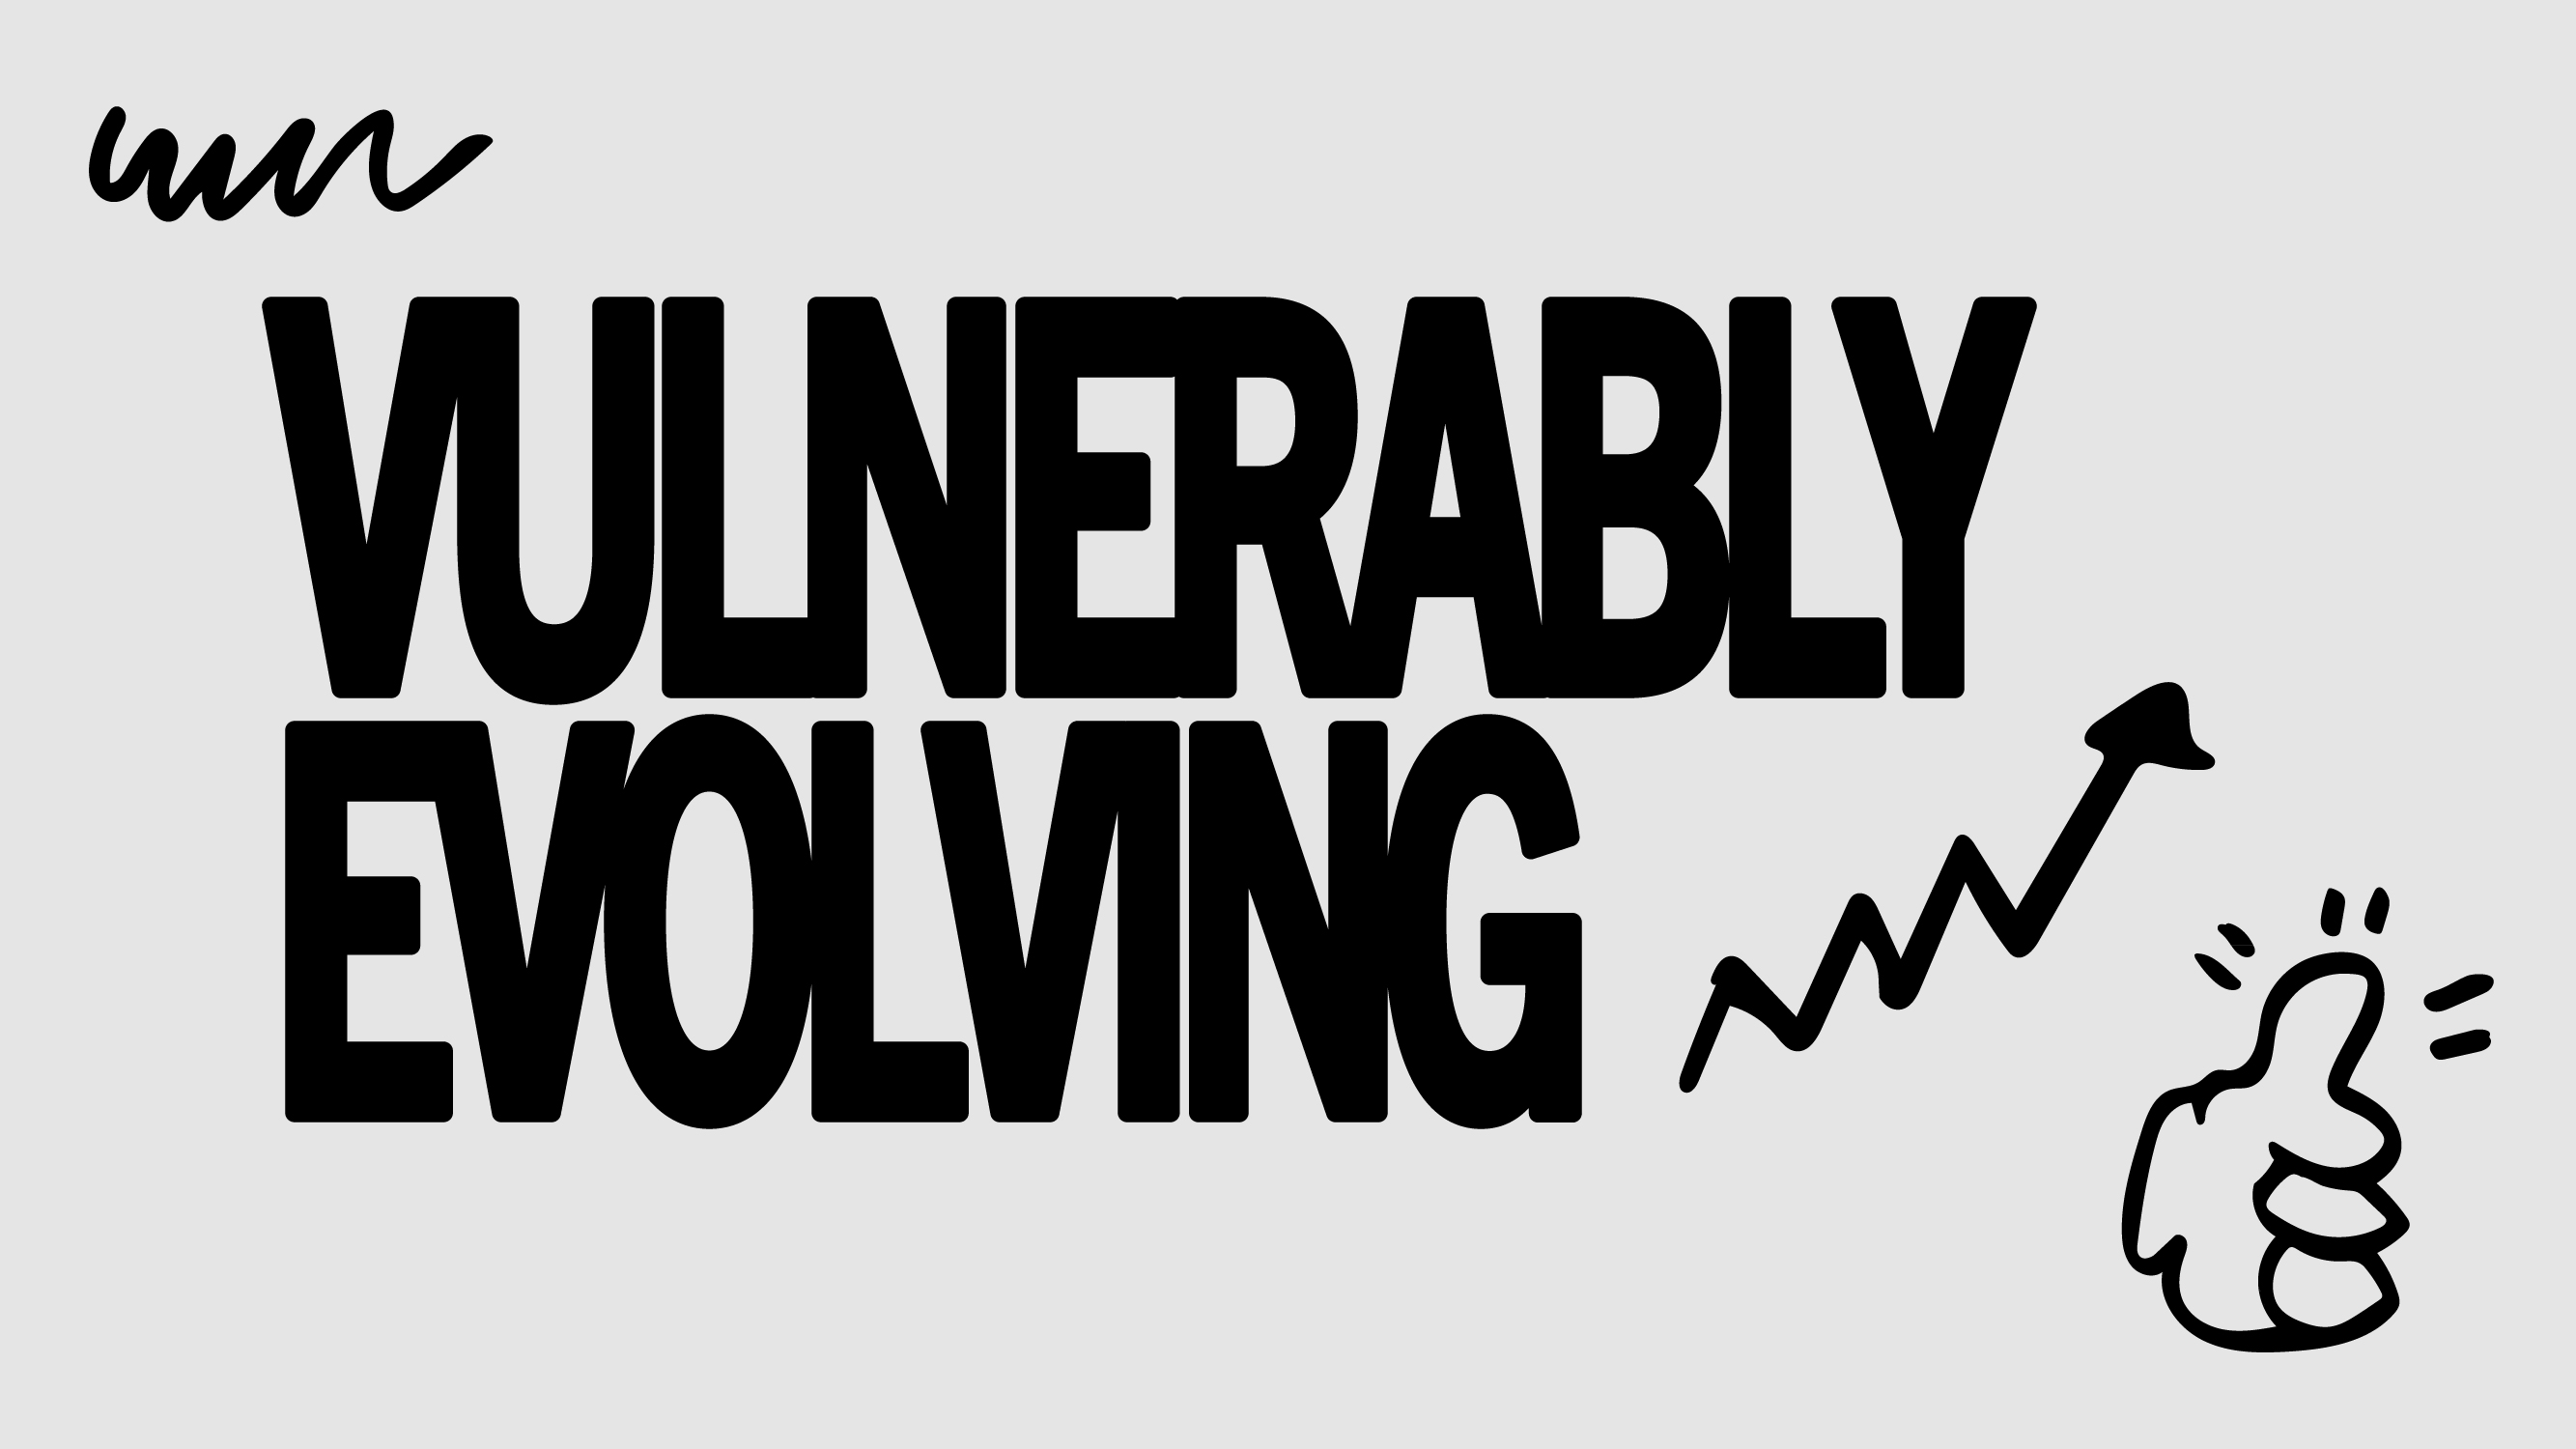 Vulnerably Evolving